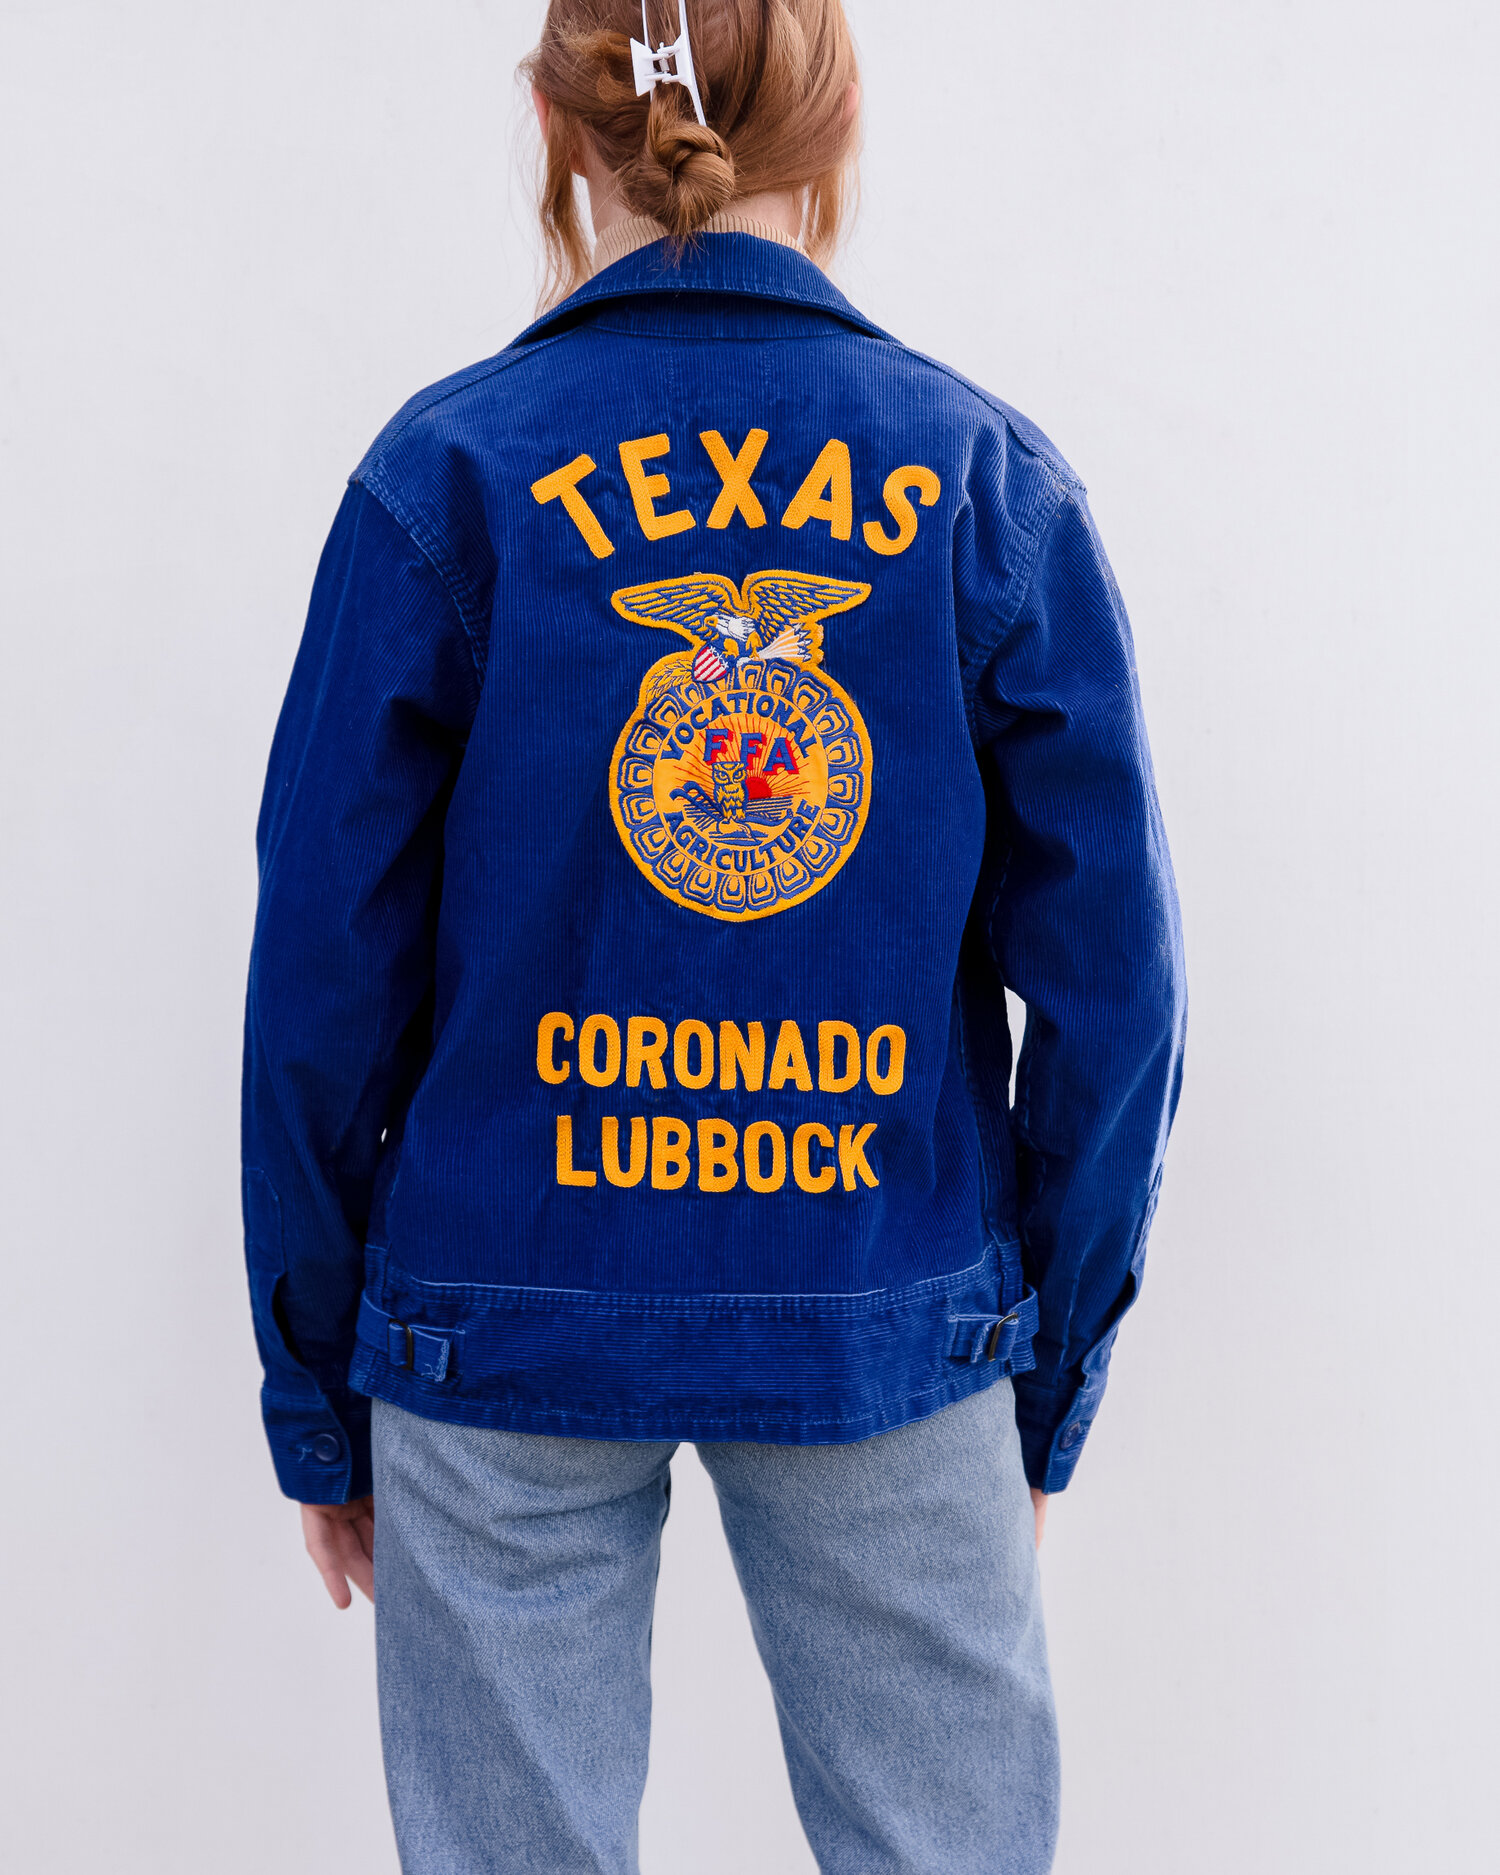 Vintage 70s 80s University of Texas Game Coat Jacket … - Gem